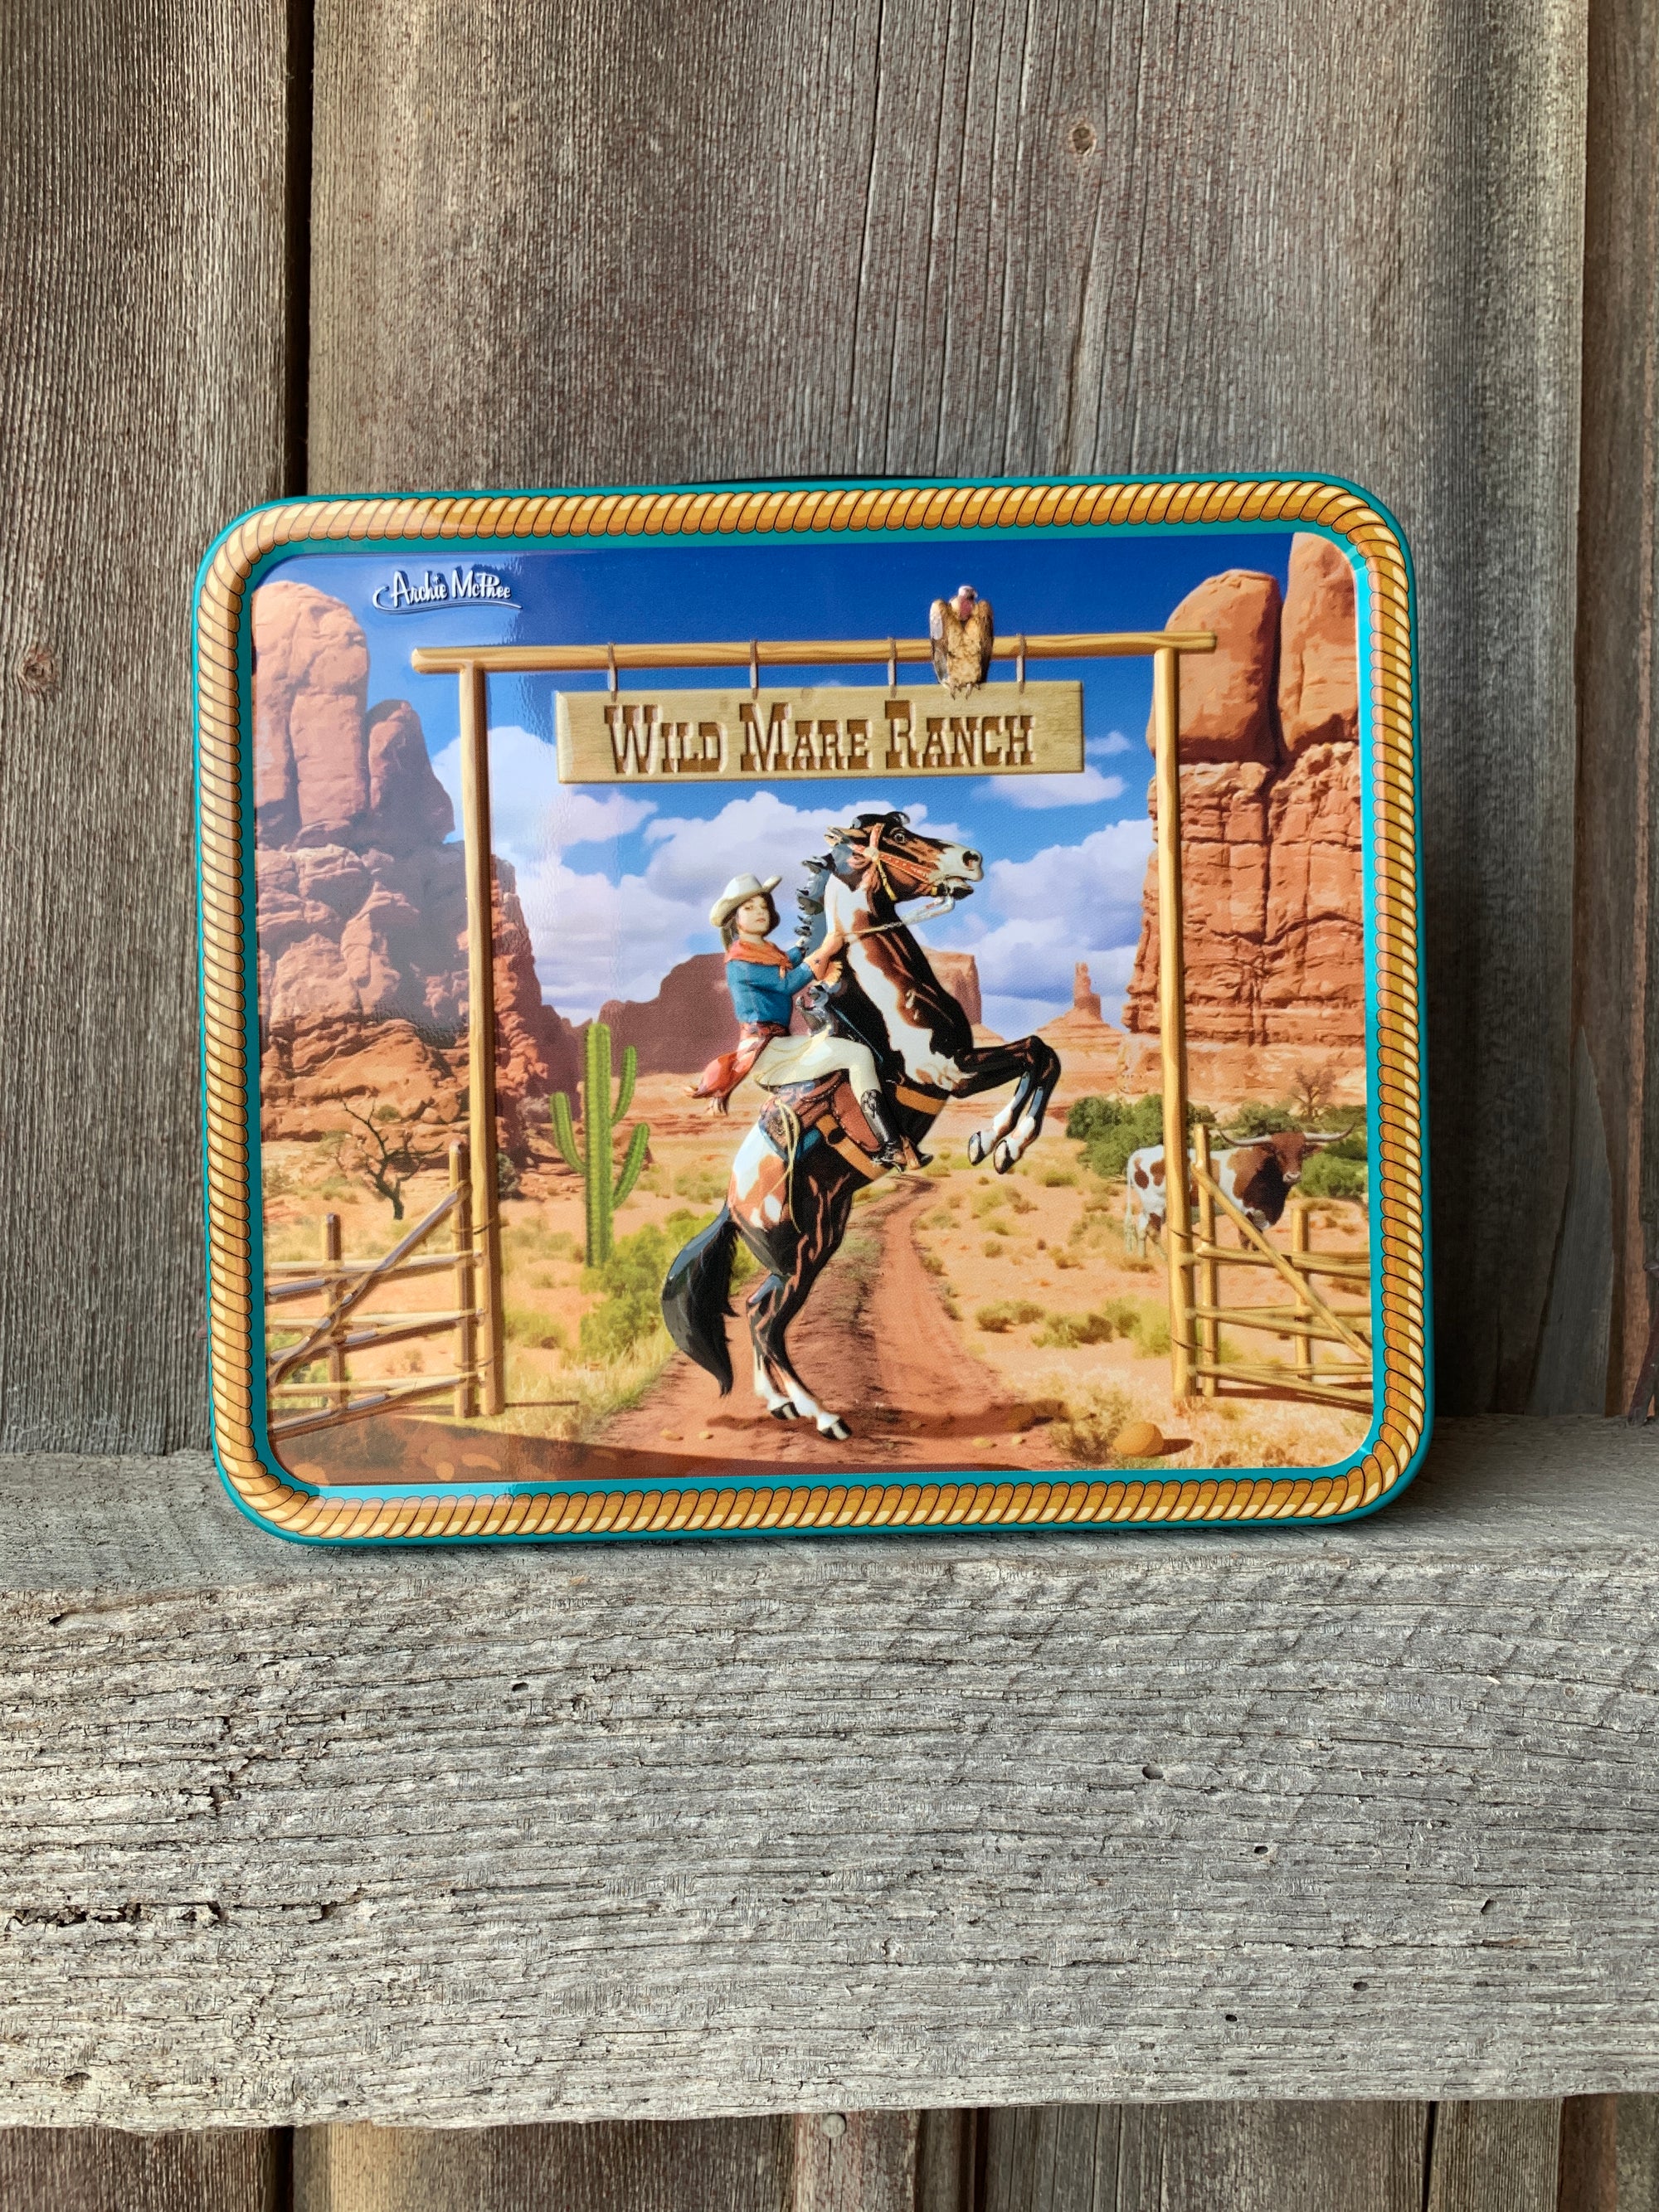 Retro Cowgirl Metal Lunch Box